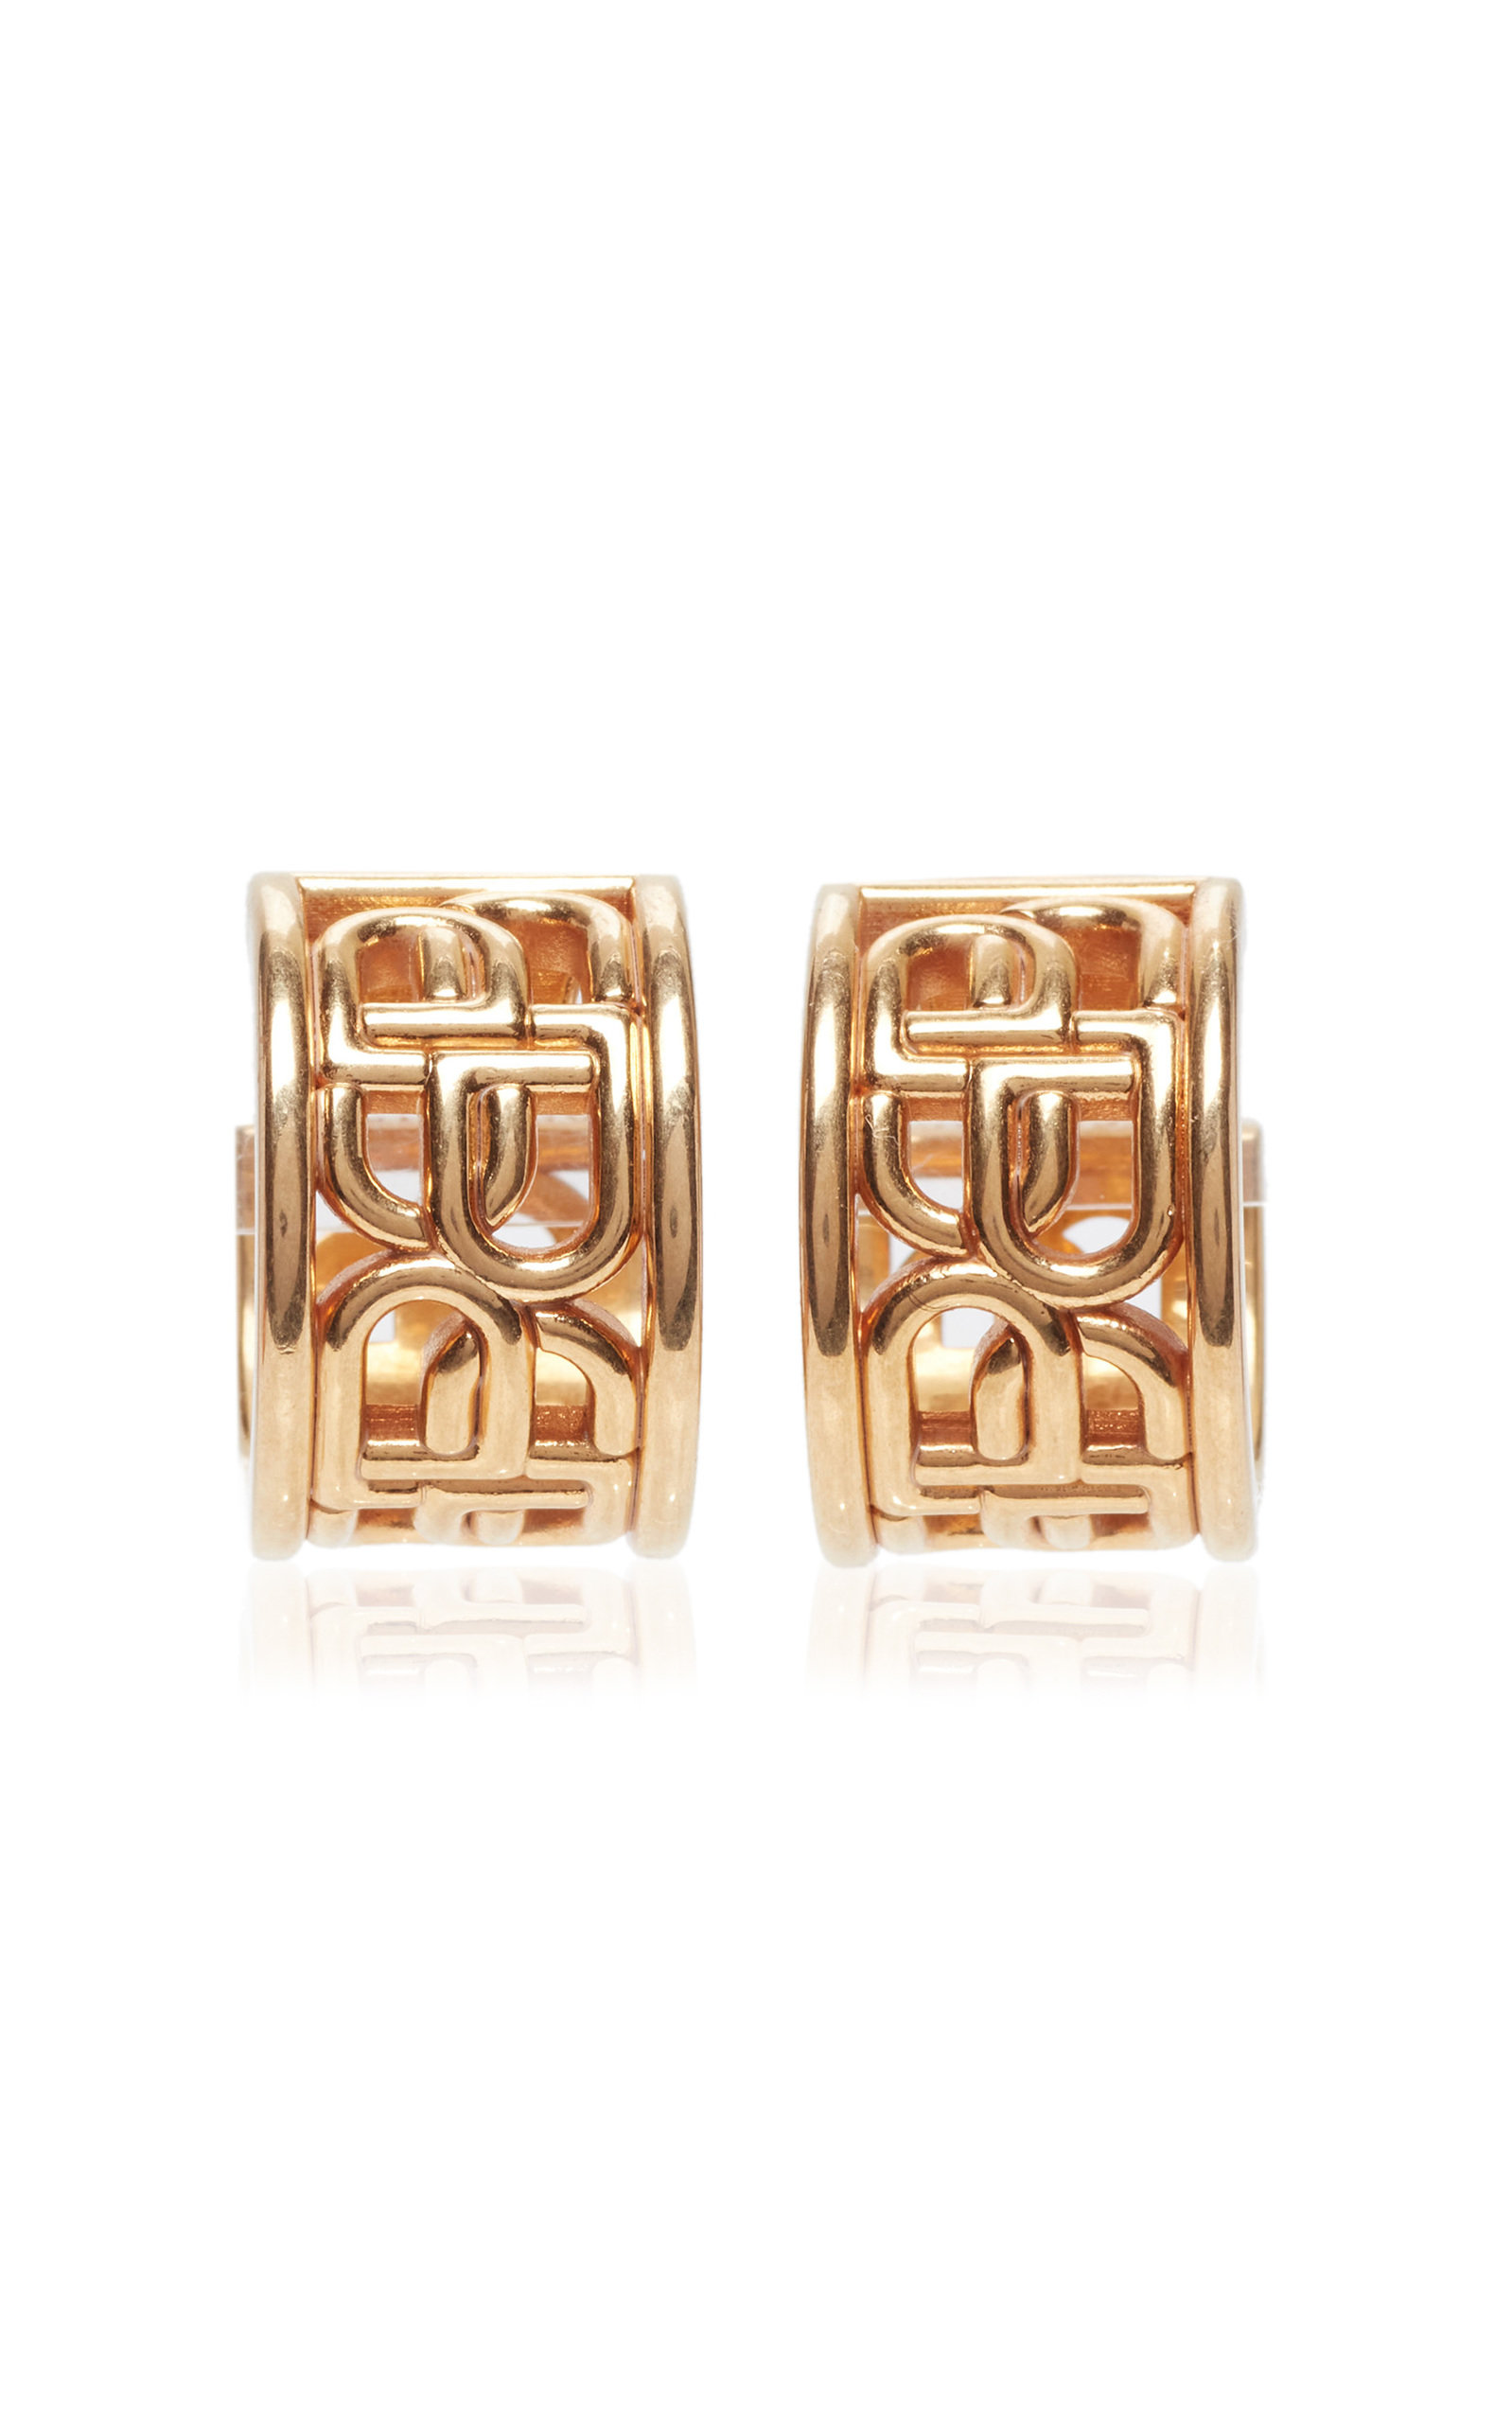 Balenciaga - Women's BB Gold-Plated Hoop Earrings - Gold - OS - Moda Operandi - Gifts For Her